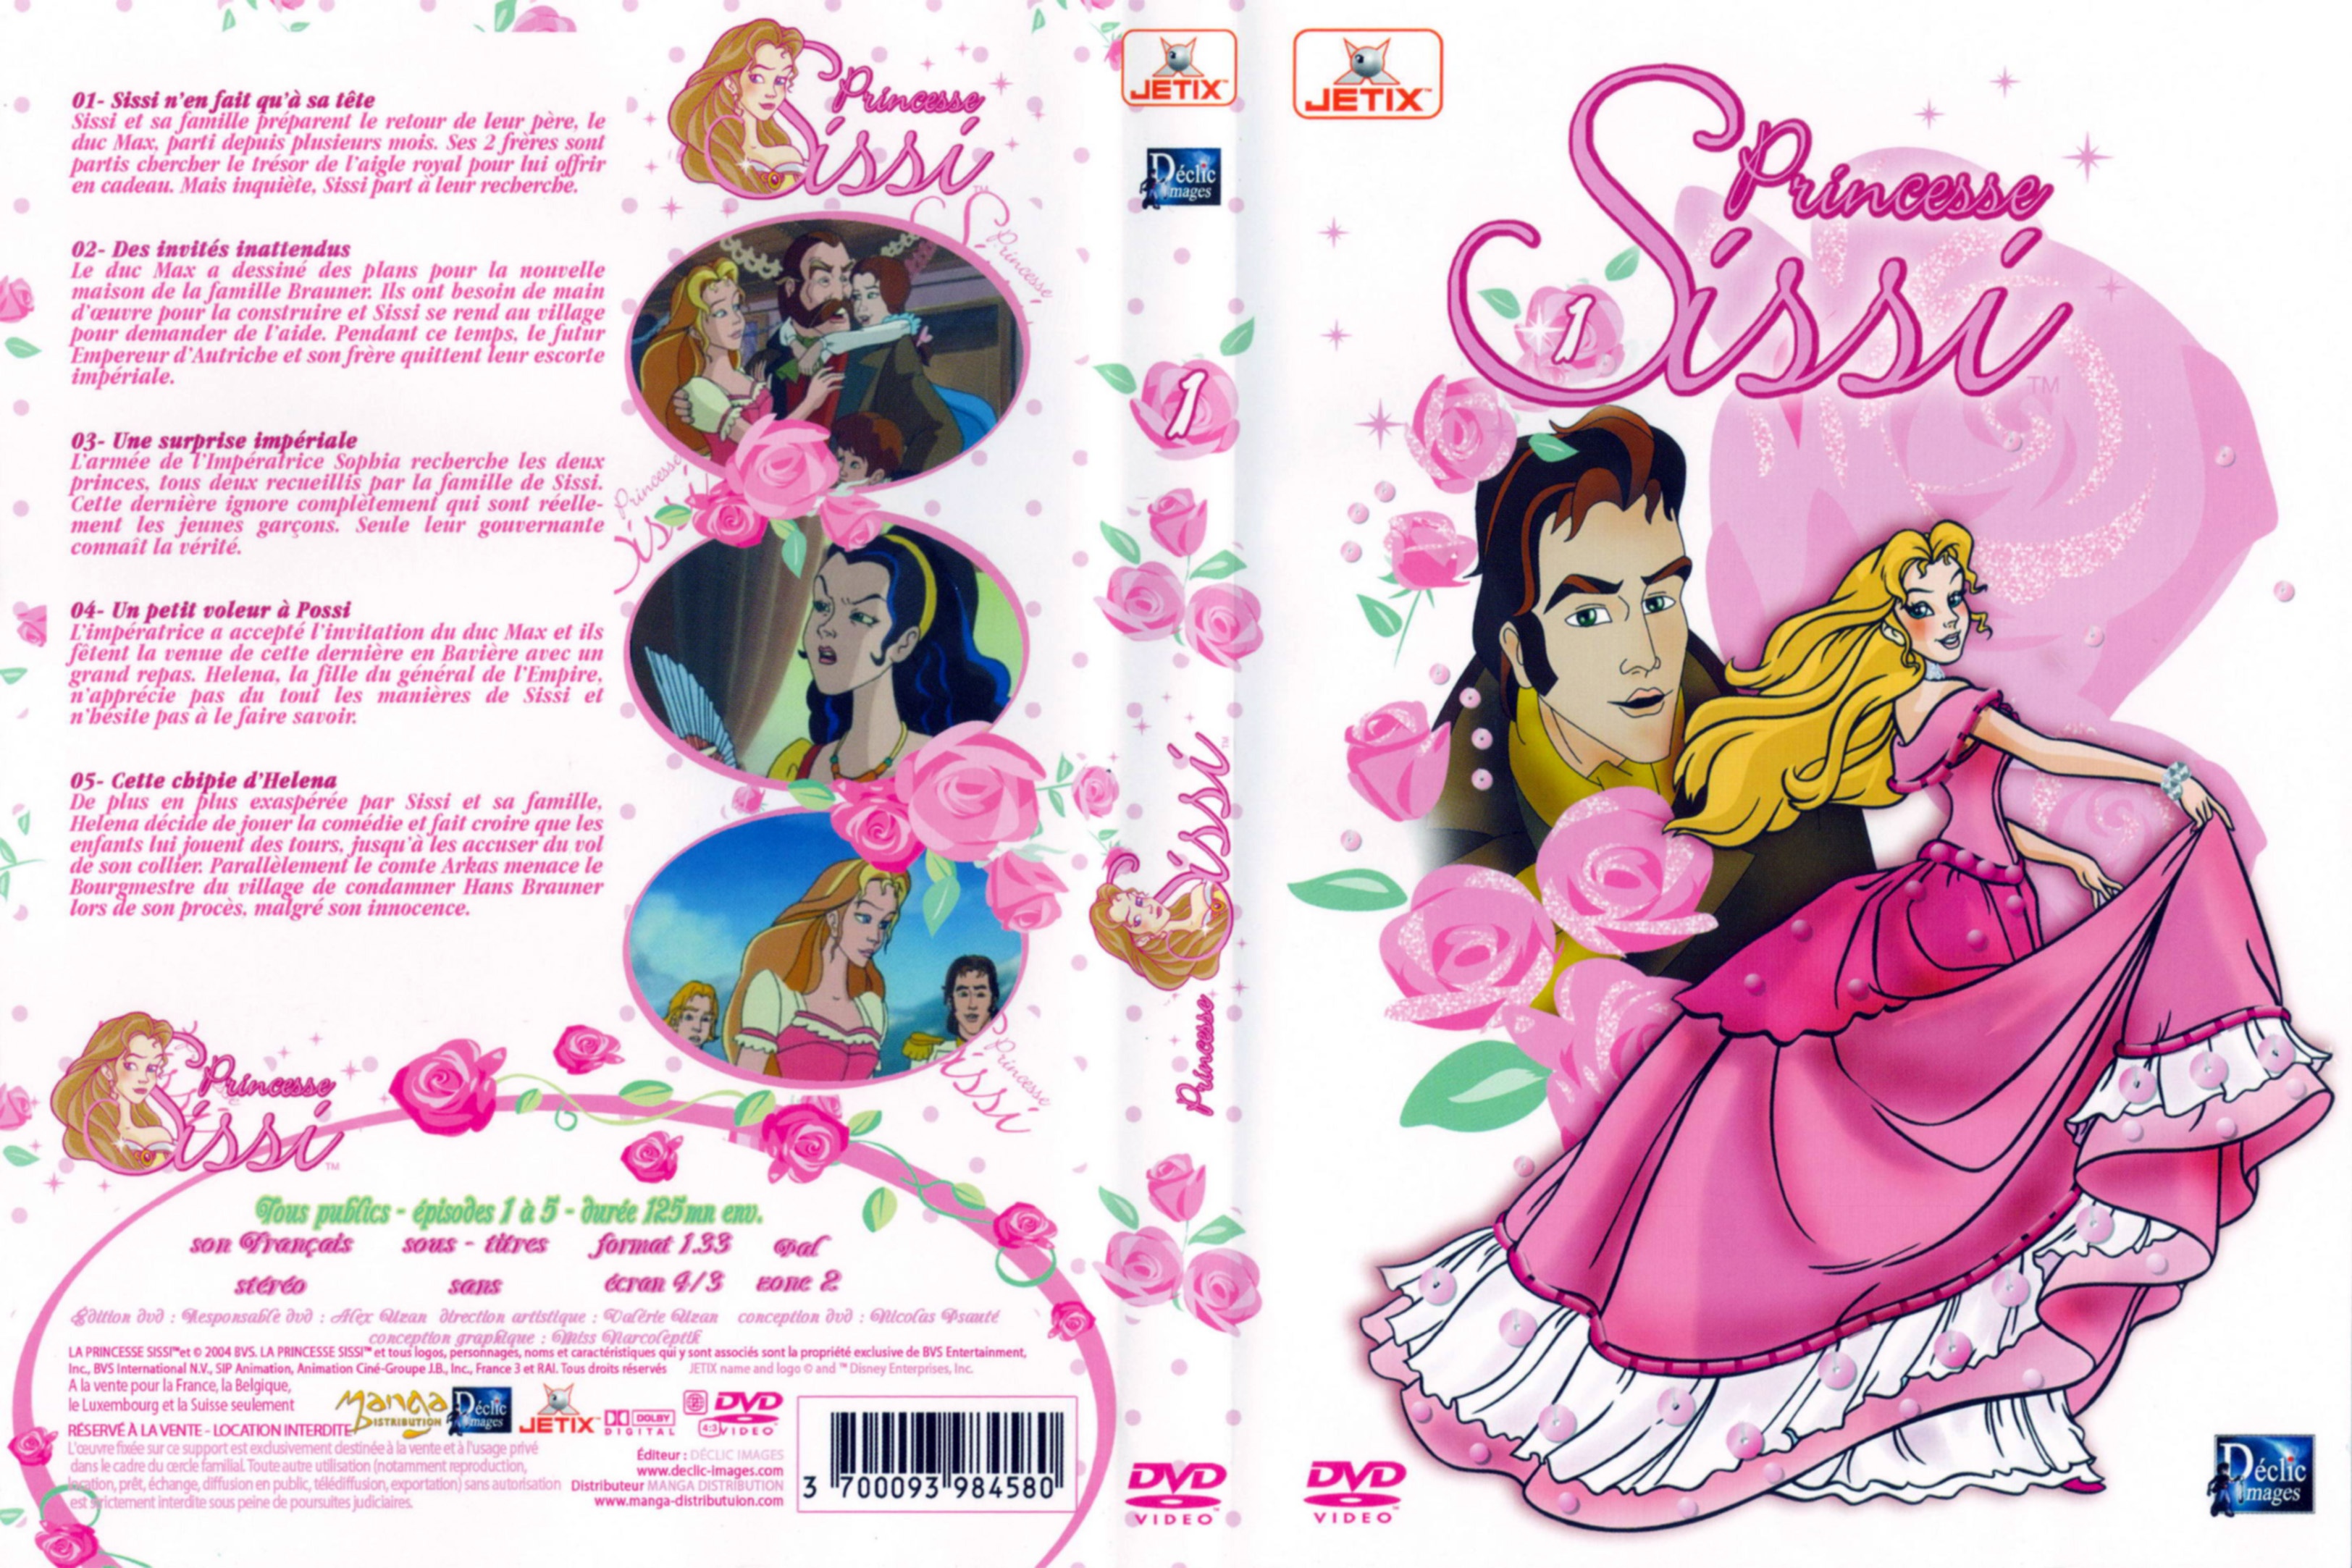 Jaquette DVD Princesse Sissi vol 1